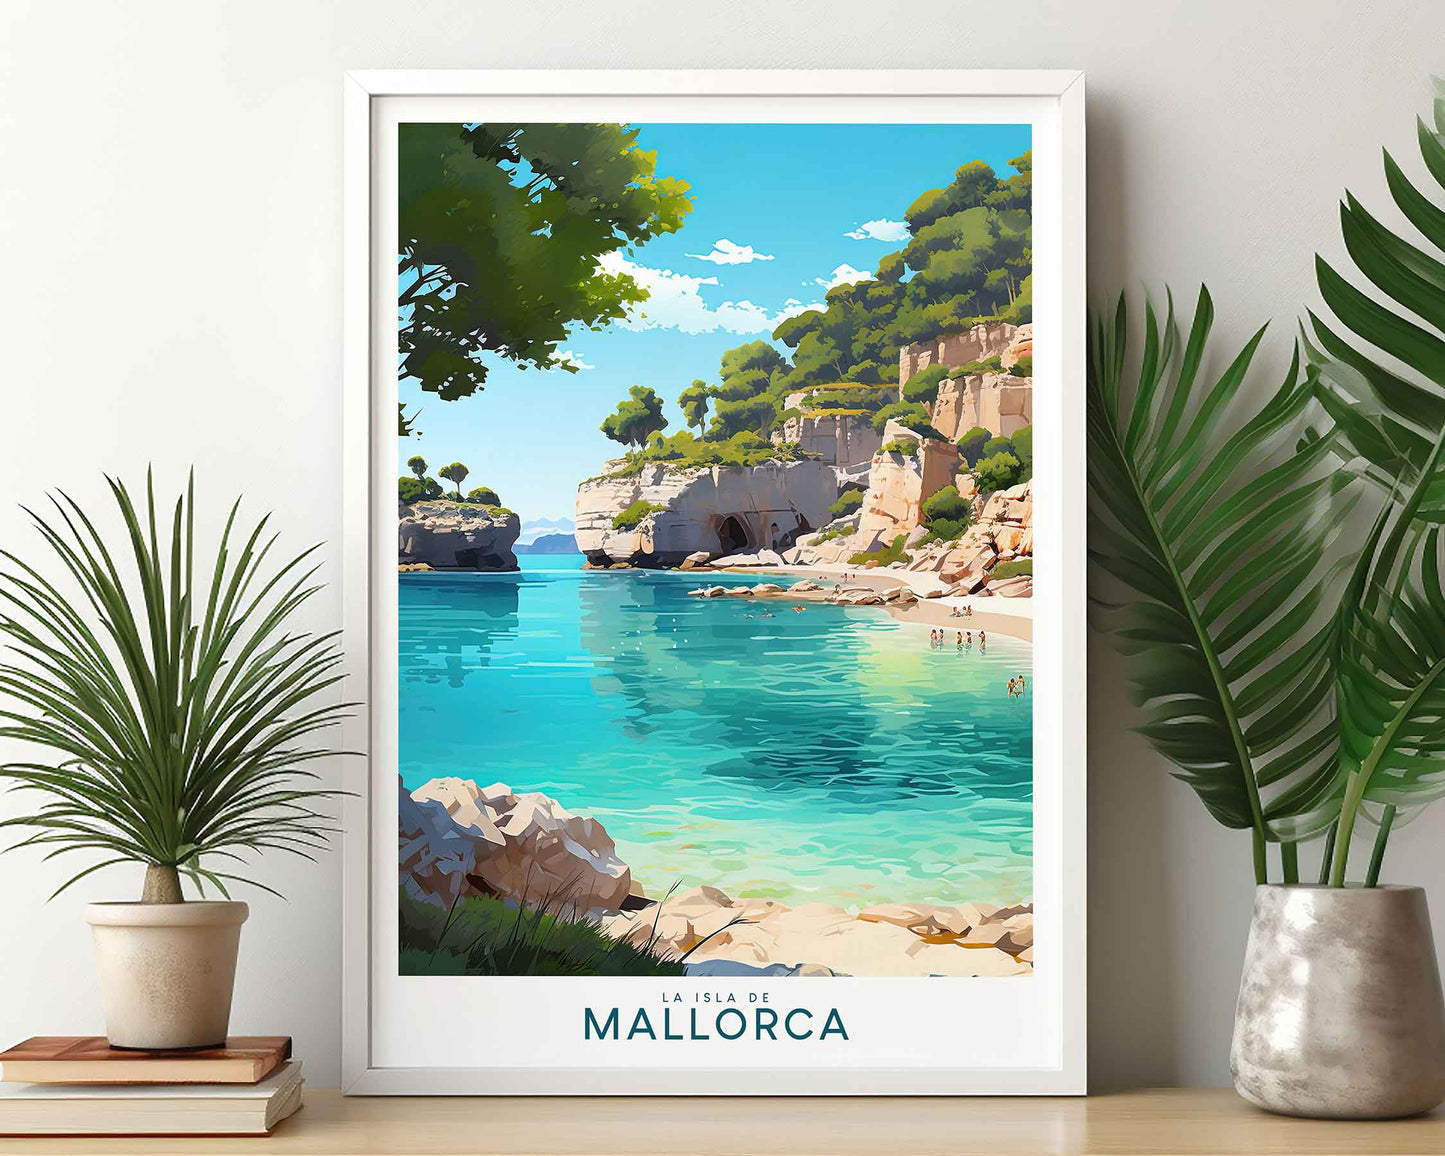 Framed Image of Mallorca Spain Travel Poster Prints Illustration Wall Art